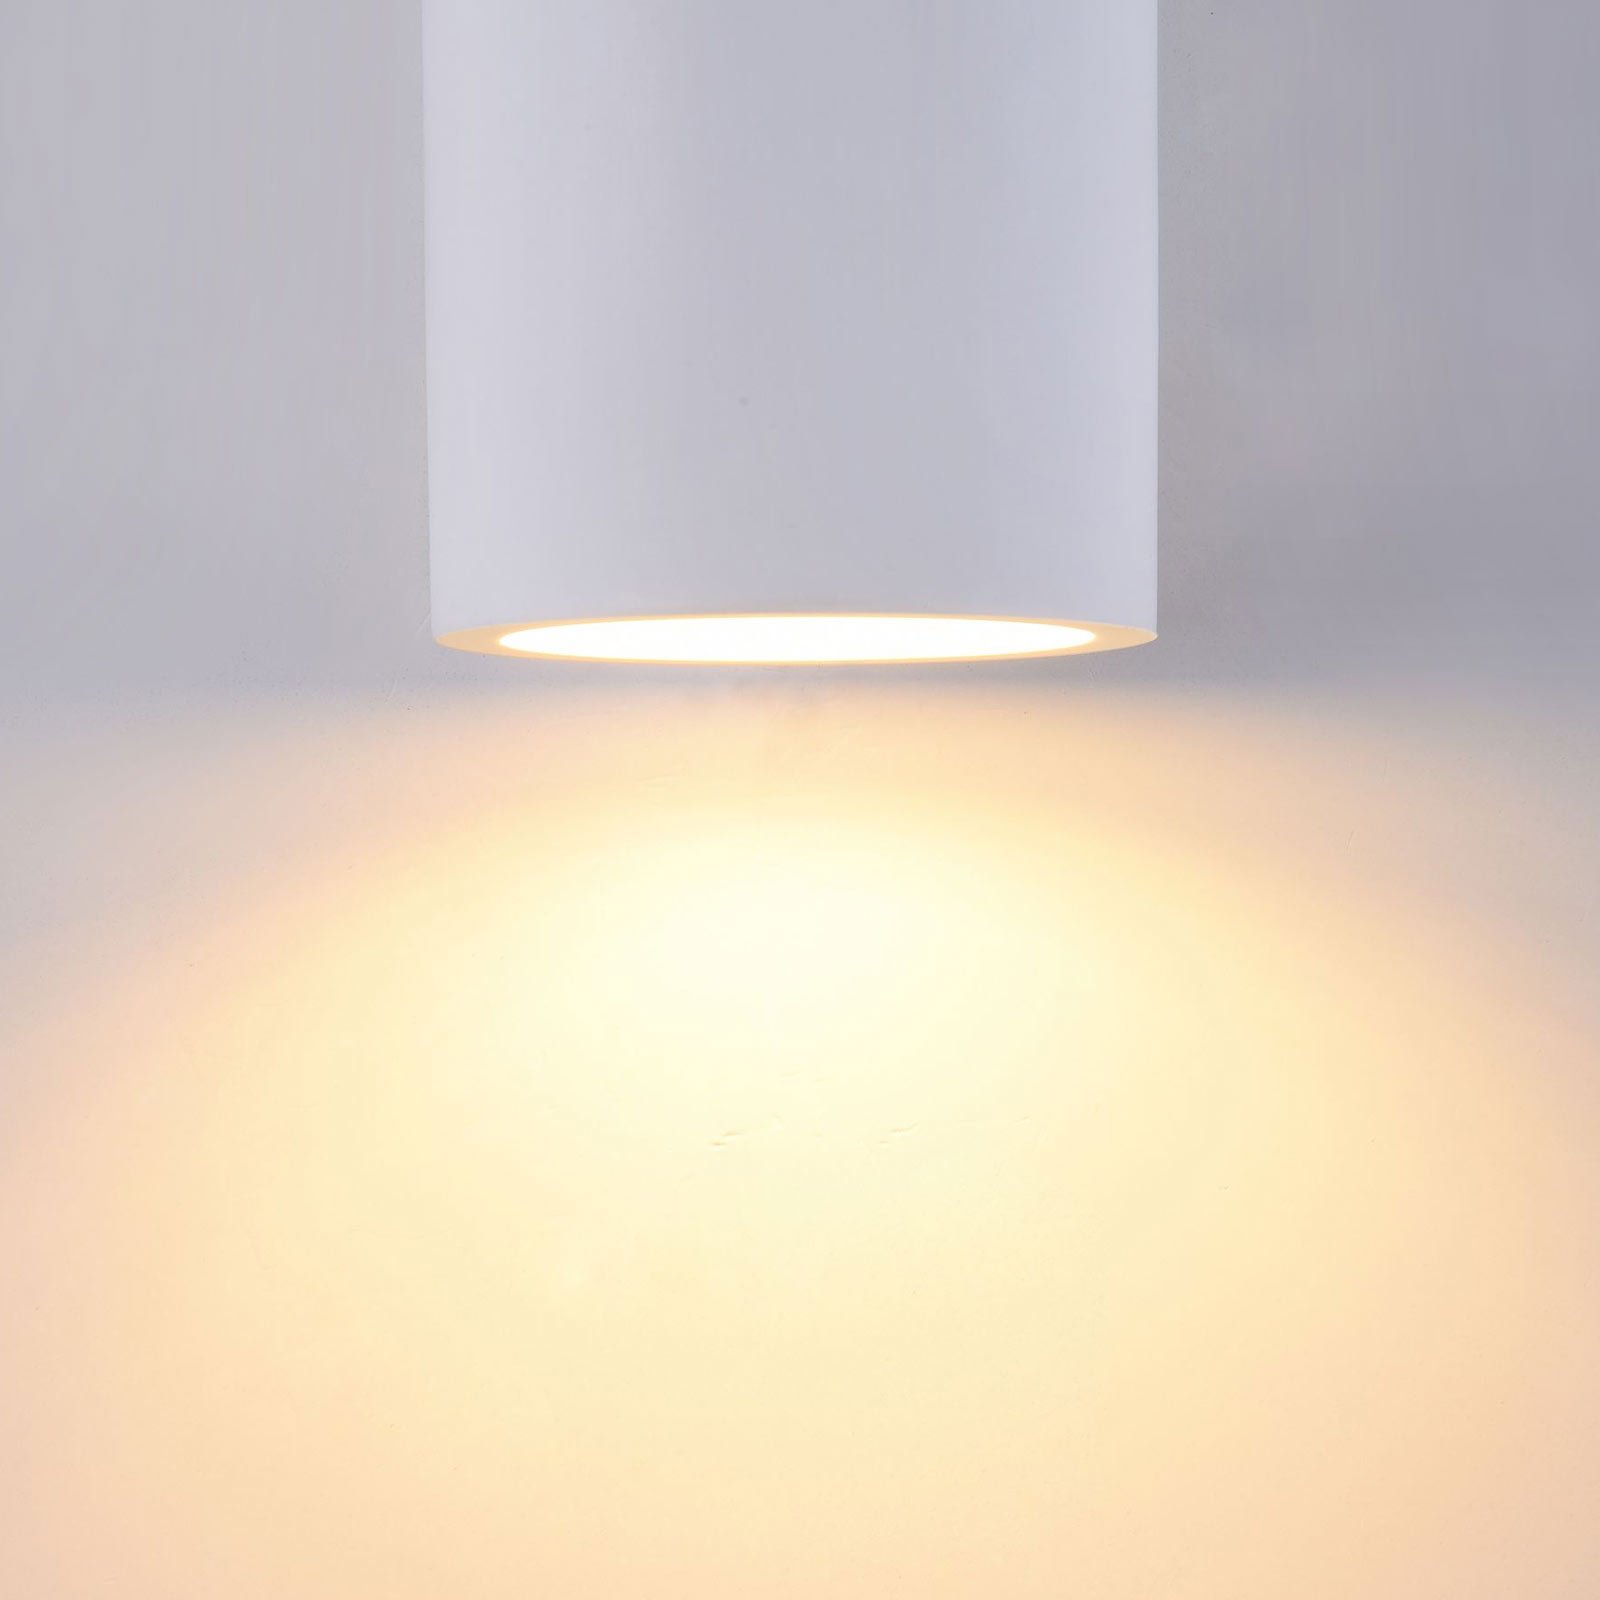 Parma wall light, plaster, 8 x 20 cm